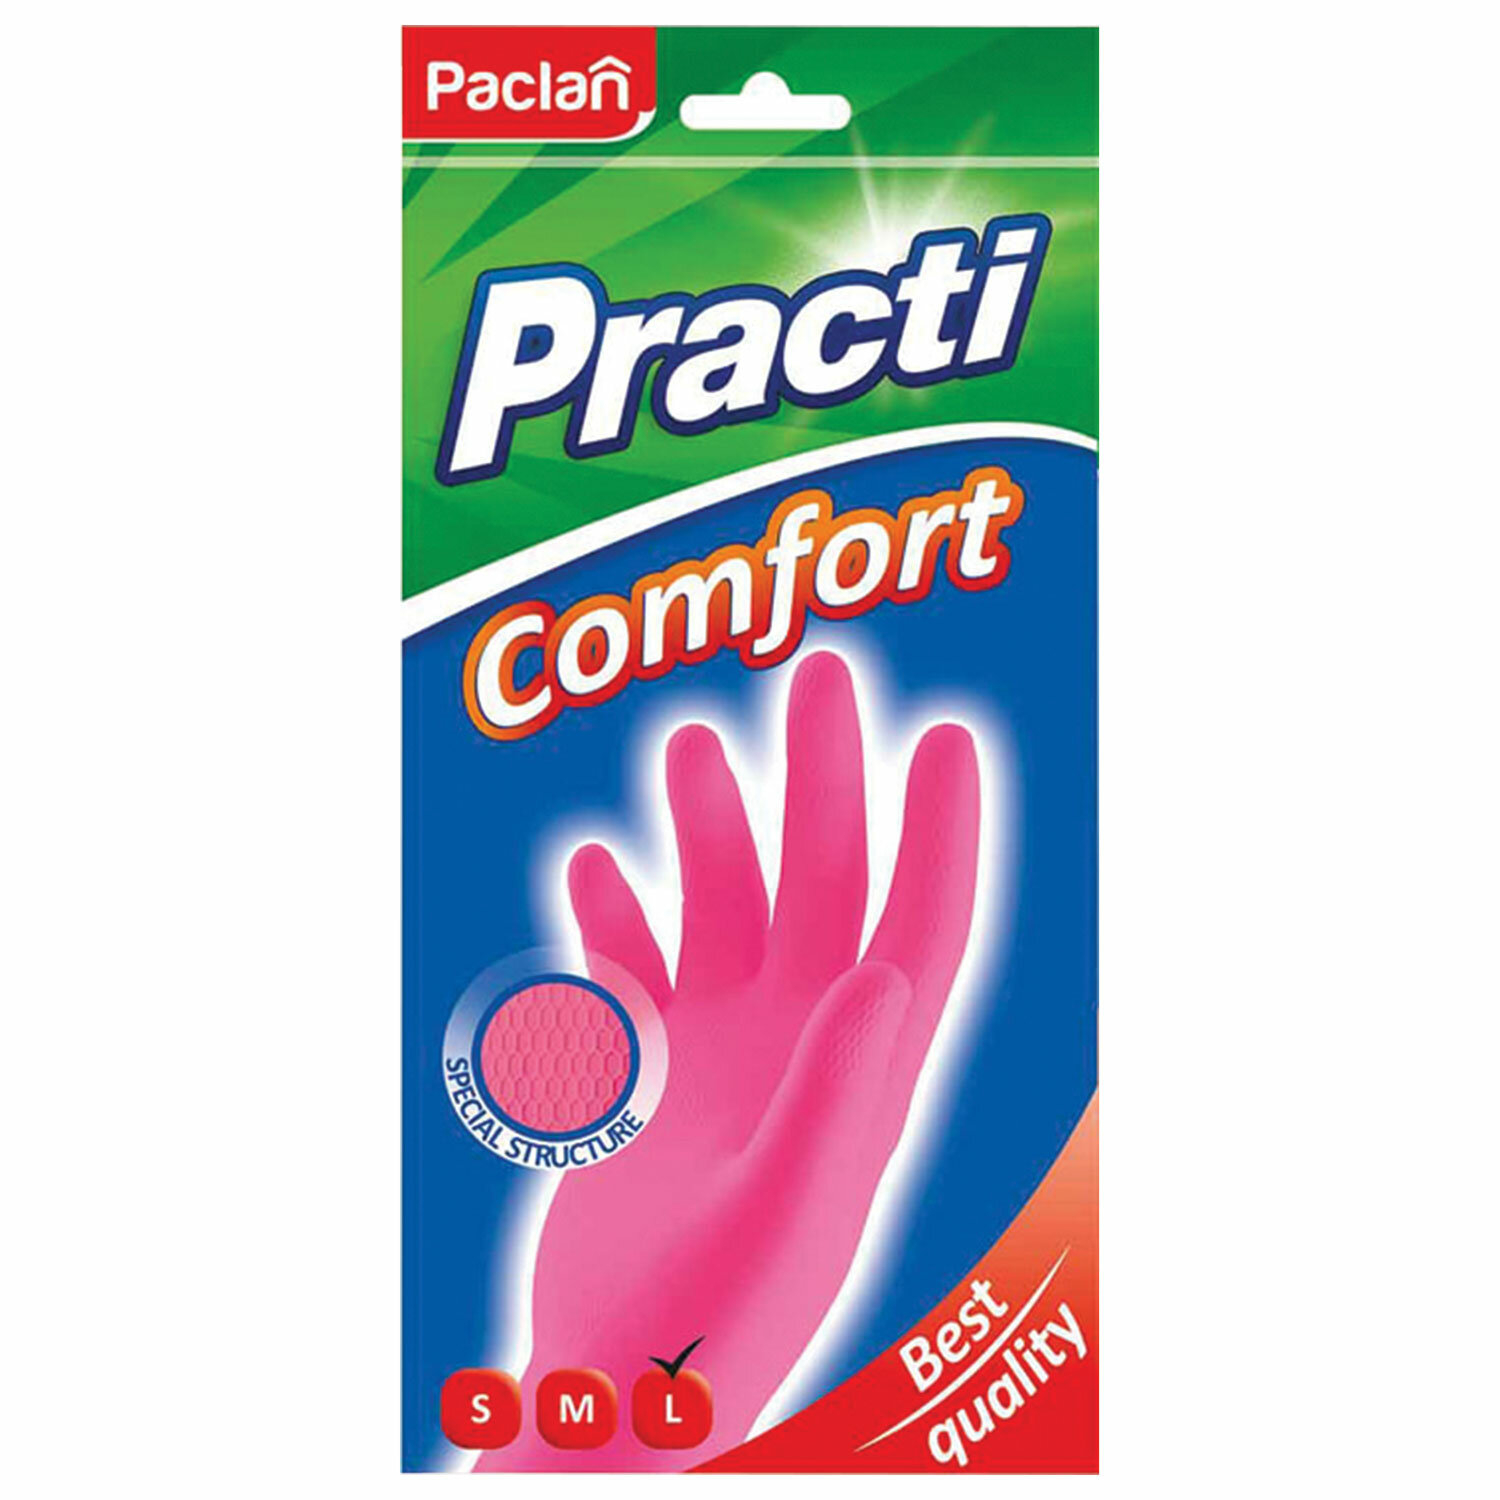 Перчатки резиновые Paclan extra dry размер L 1 пара в ассортименте резиновые перчатки paclan